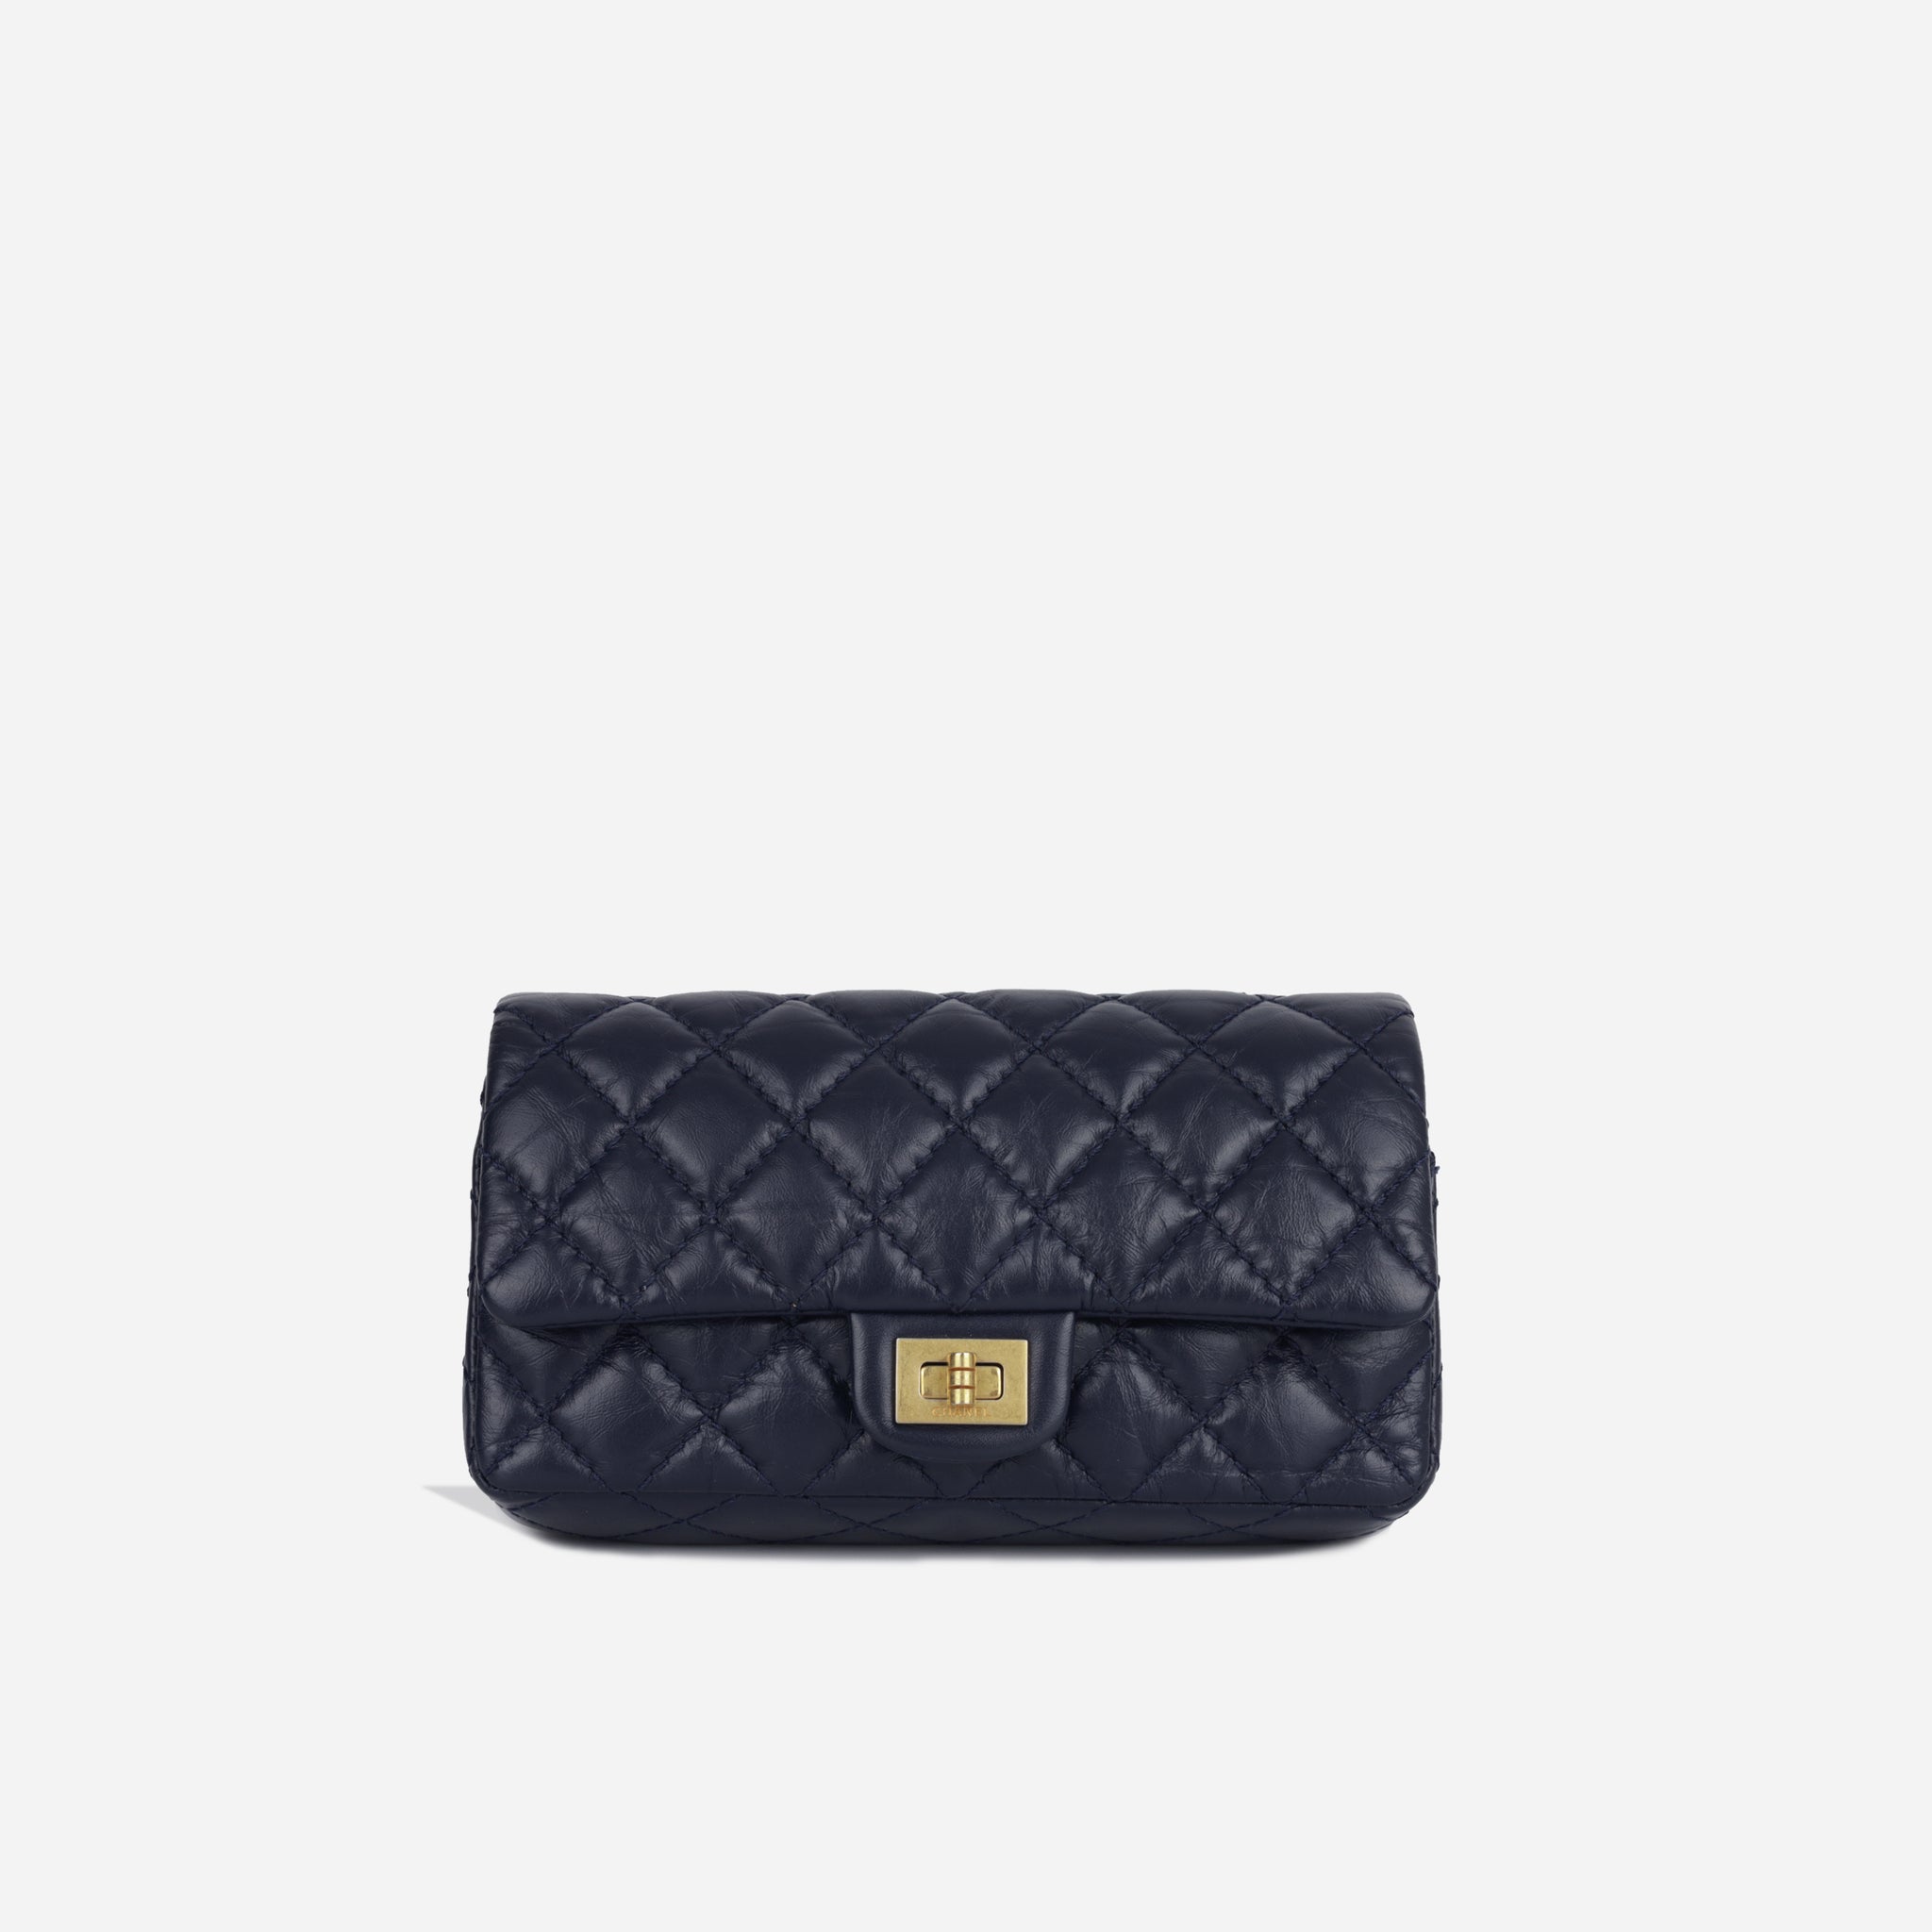 Chanel - Mini 2.55 Belt Bag - Navy Aged Calfskin - GHW - 2019